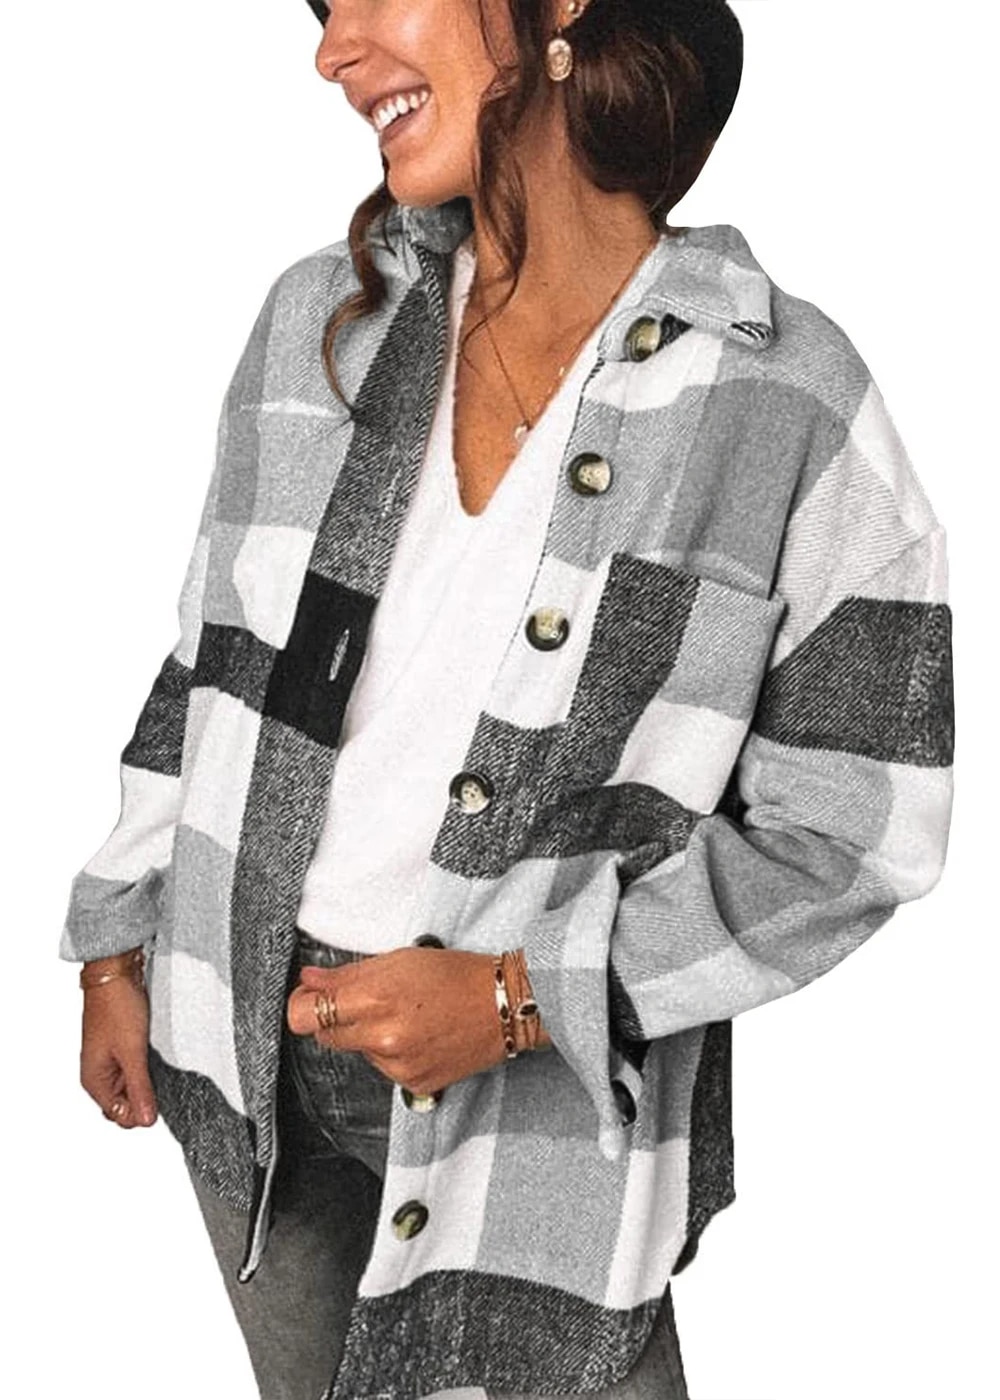 Fantaslook Womens Plaid Shirts Flannel Shacket Jacket Long Sleeve Button Down Boyfriend Shirt Coats, L - image 3 of 8